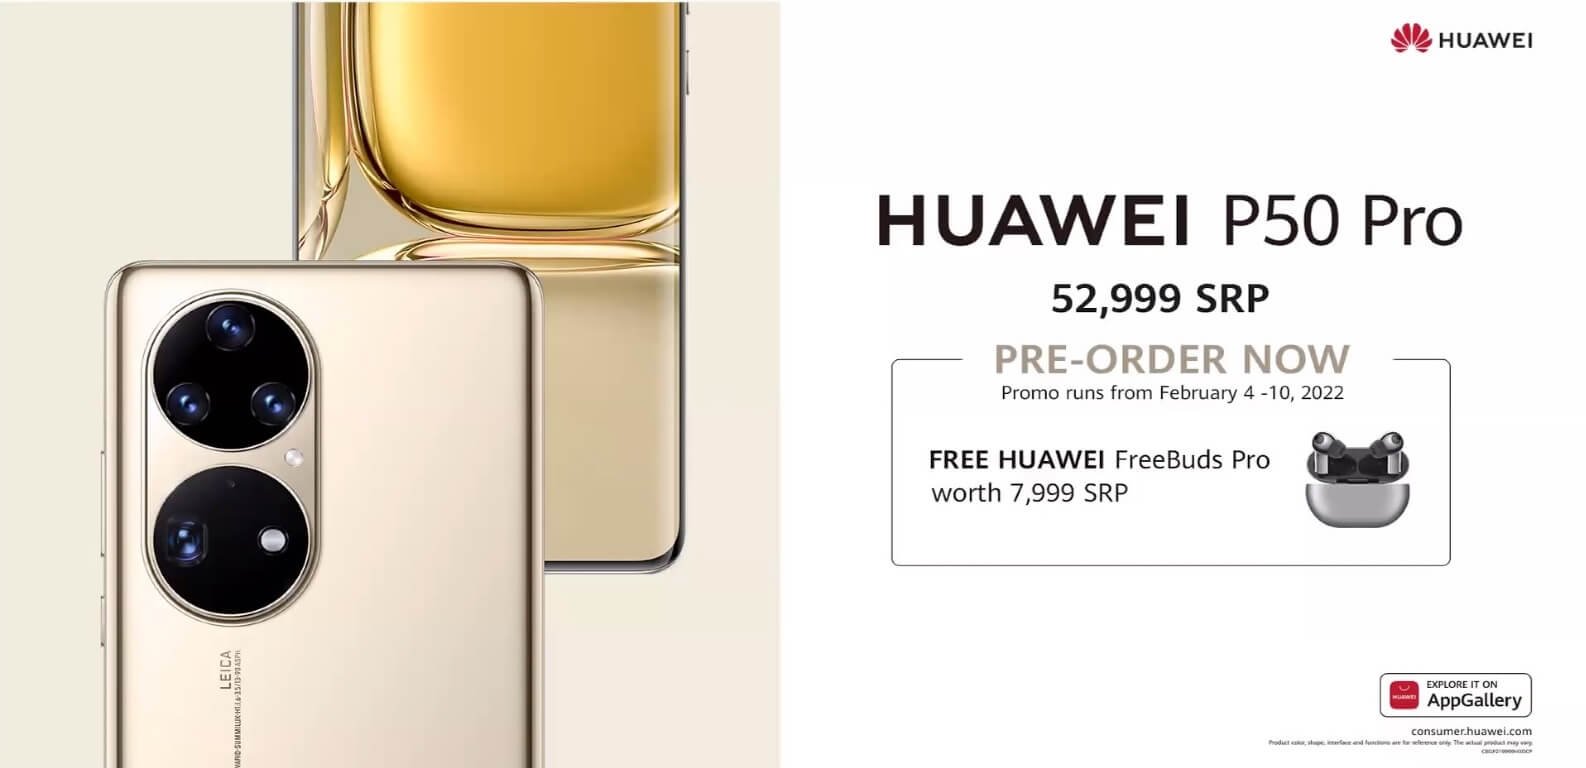 Huawei P50 Pro